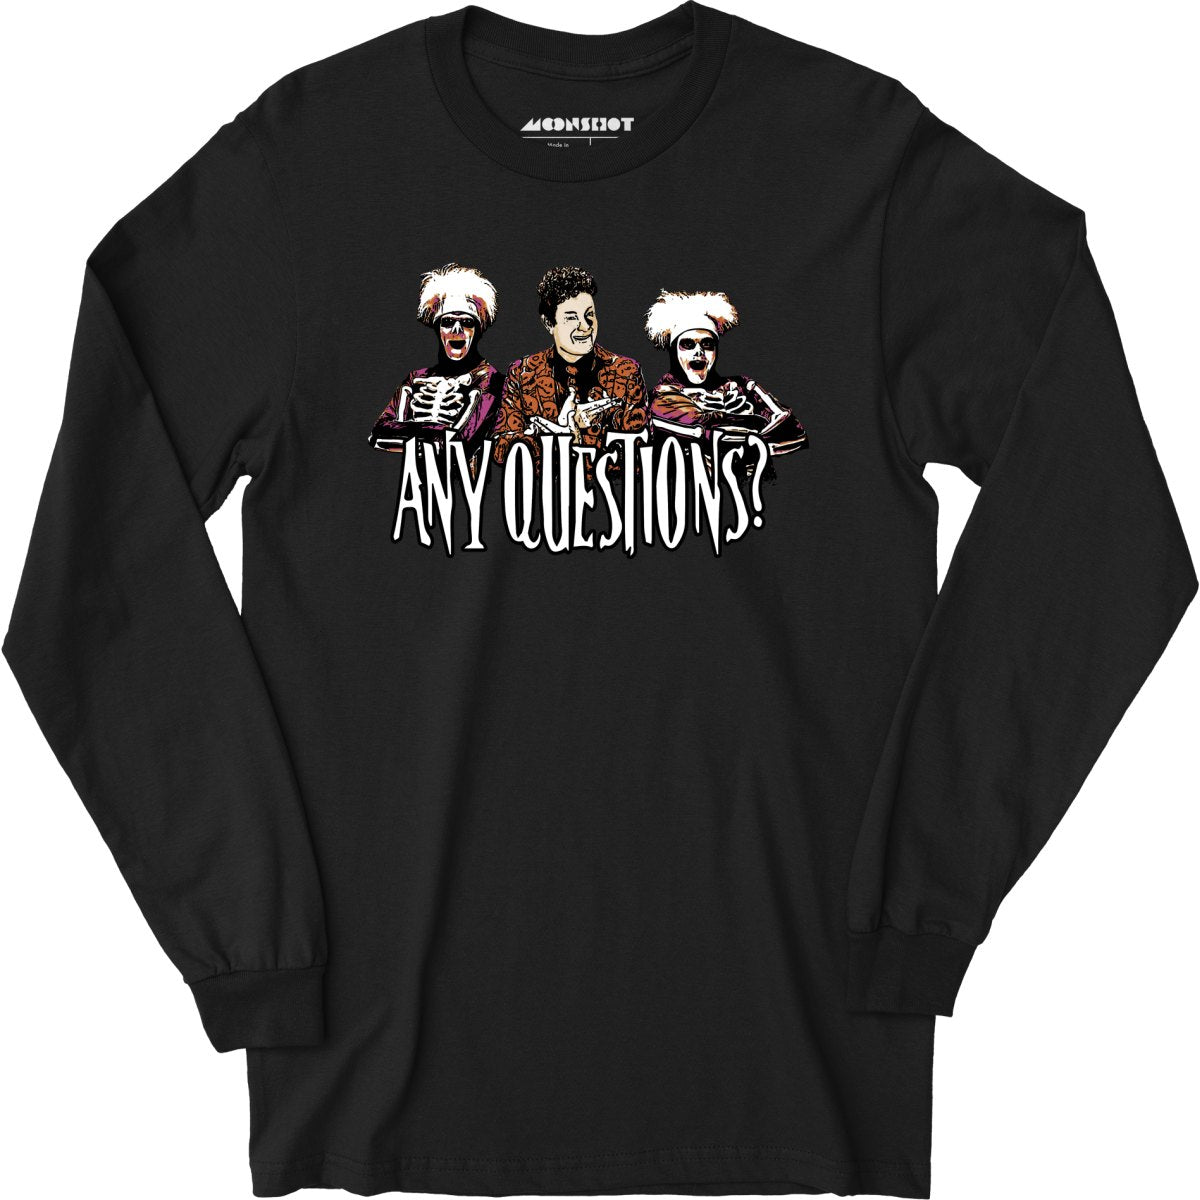 David S. Pumpkins - Any Questions? - Long Sleeve T-Shirt